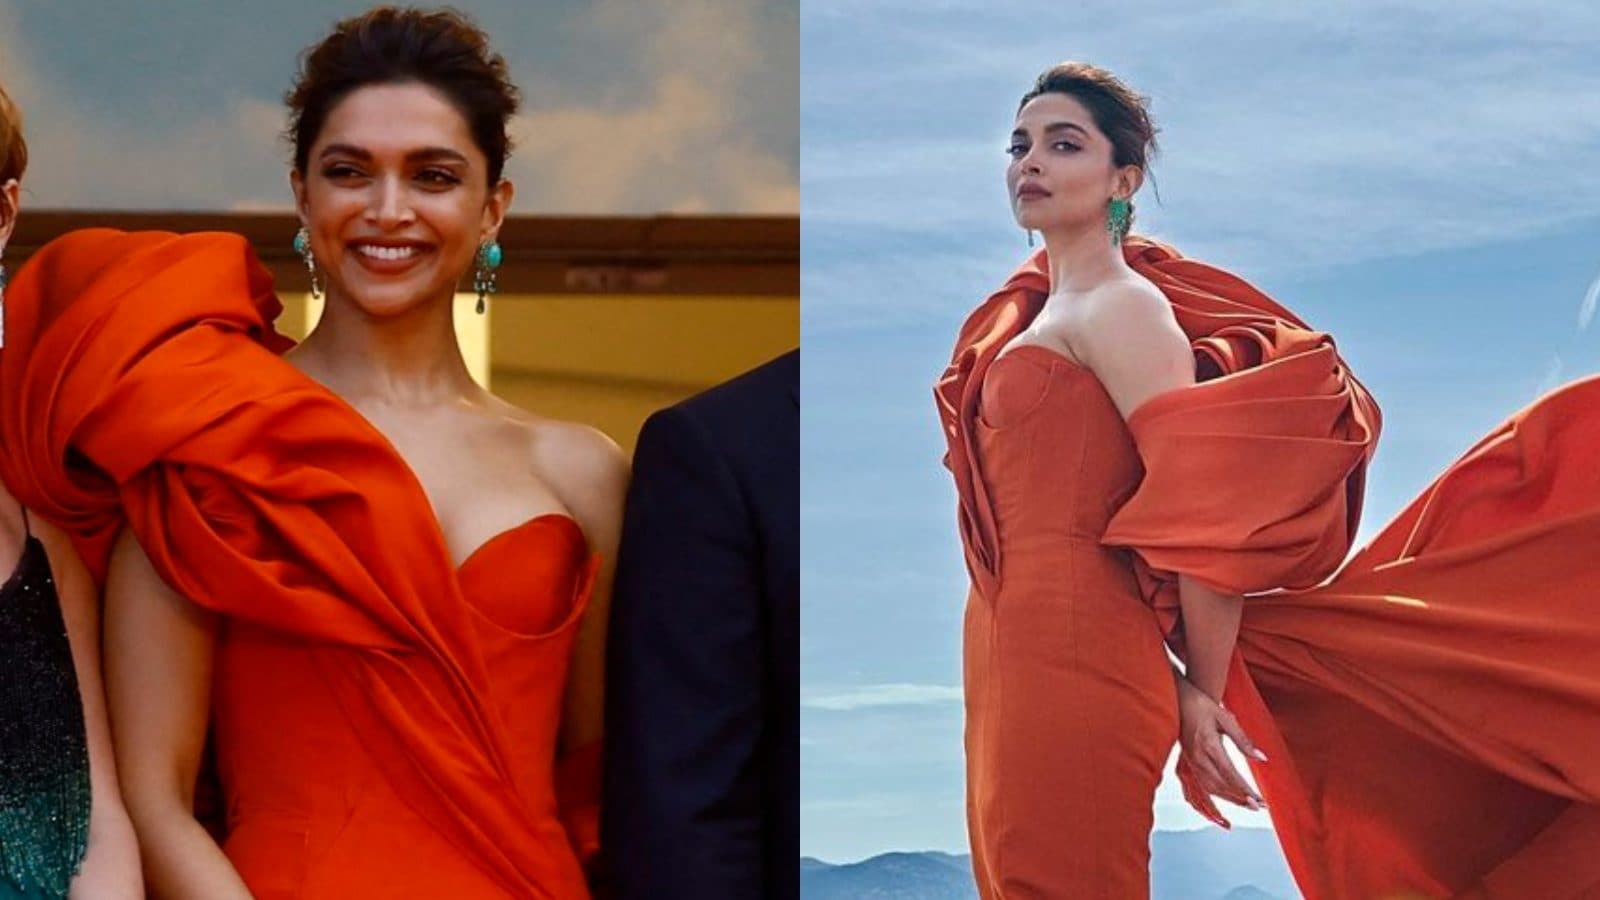 Deepika Padukone in Louis Vuitton gown walks Cannes 2022 red